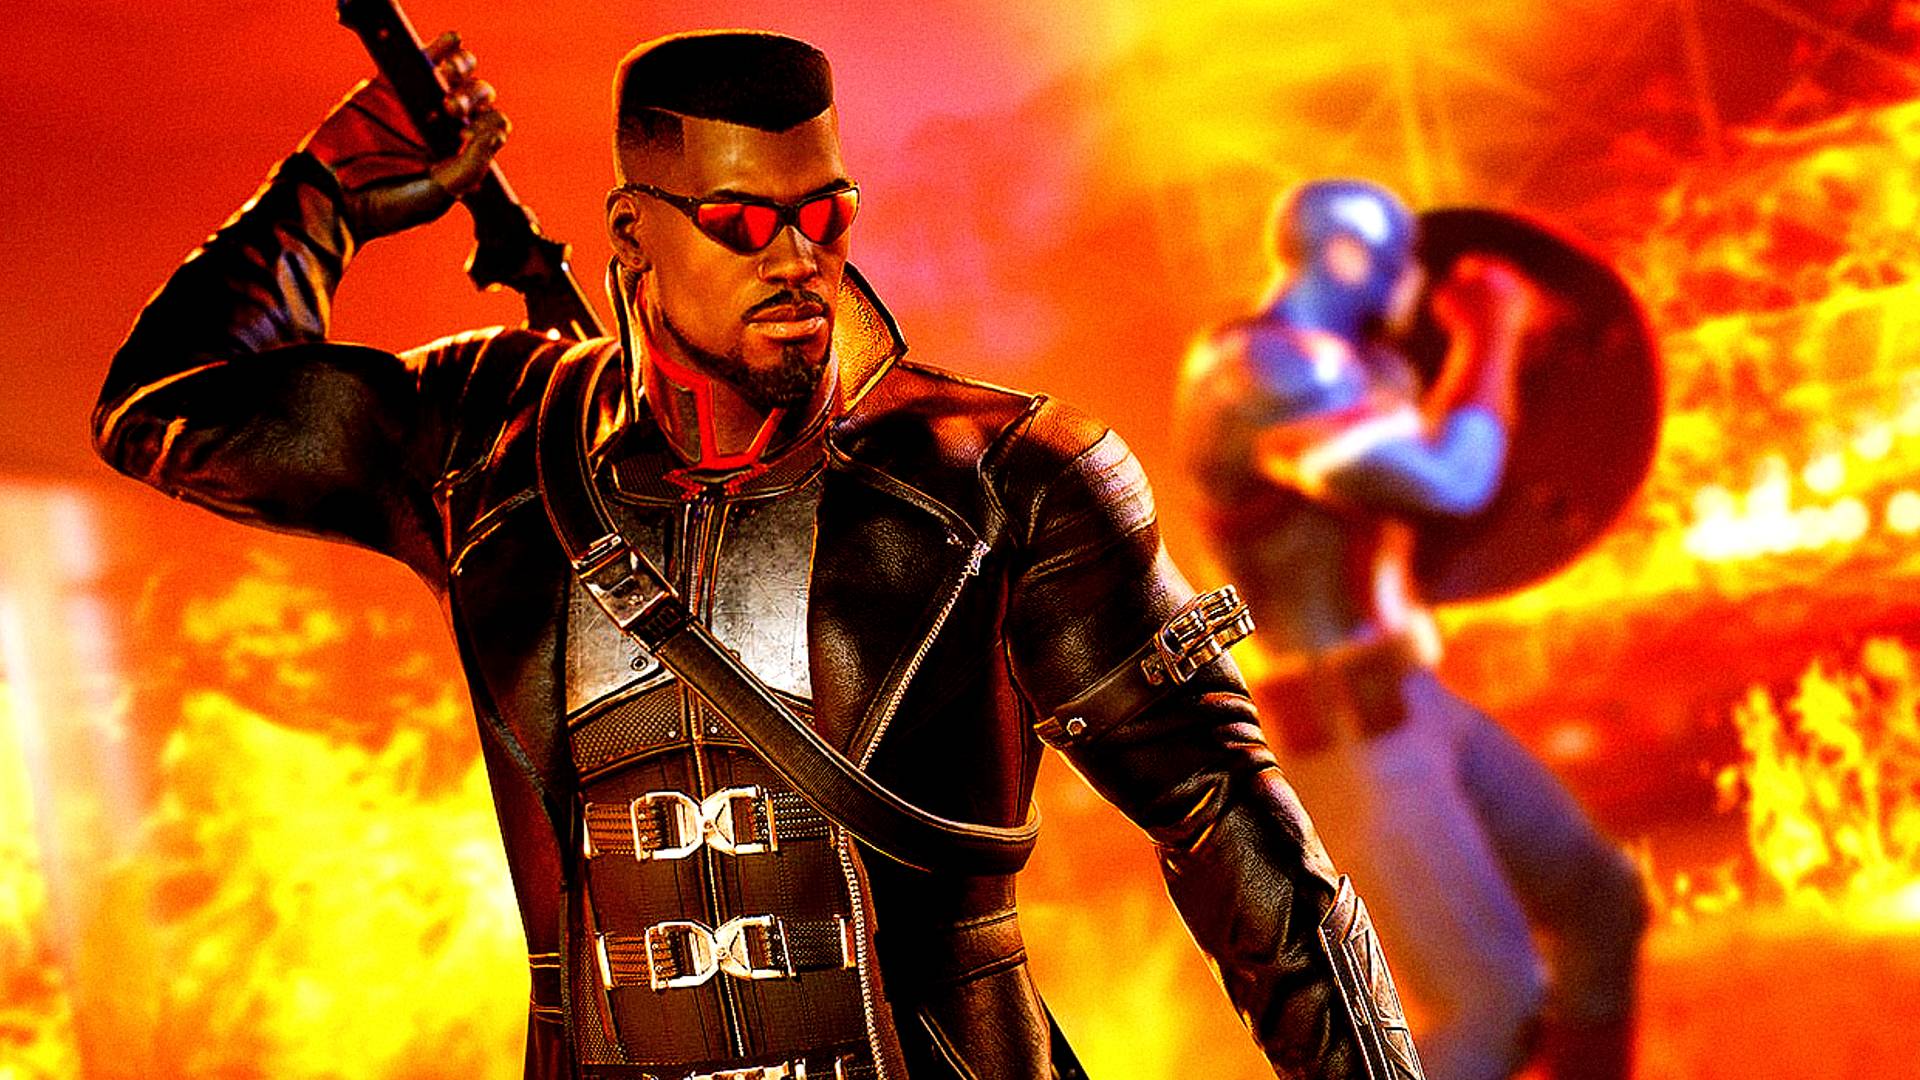 Marvel's Midnight Suns: Every Playable Hero